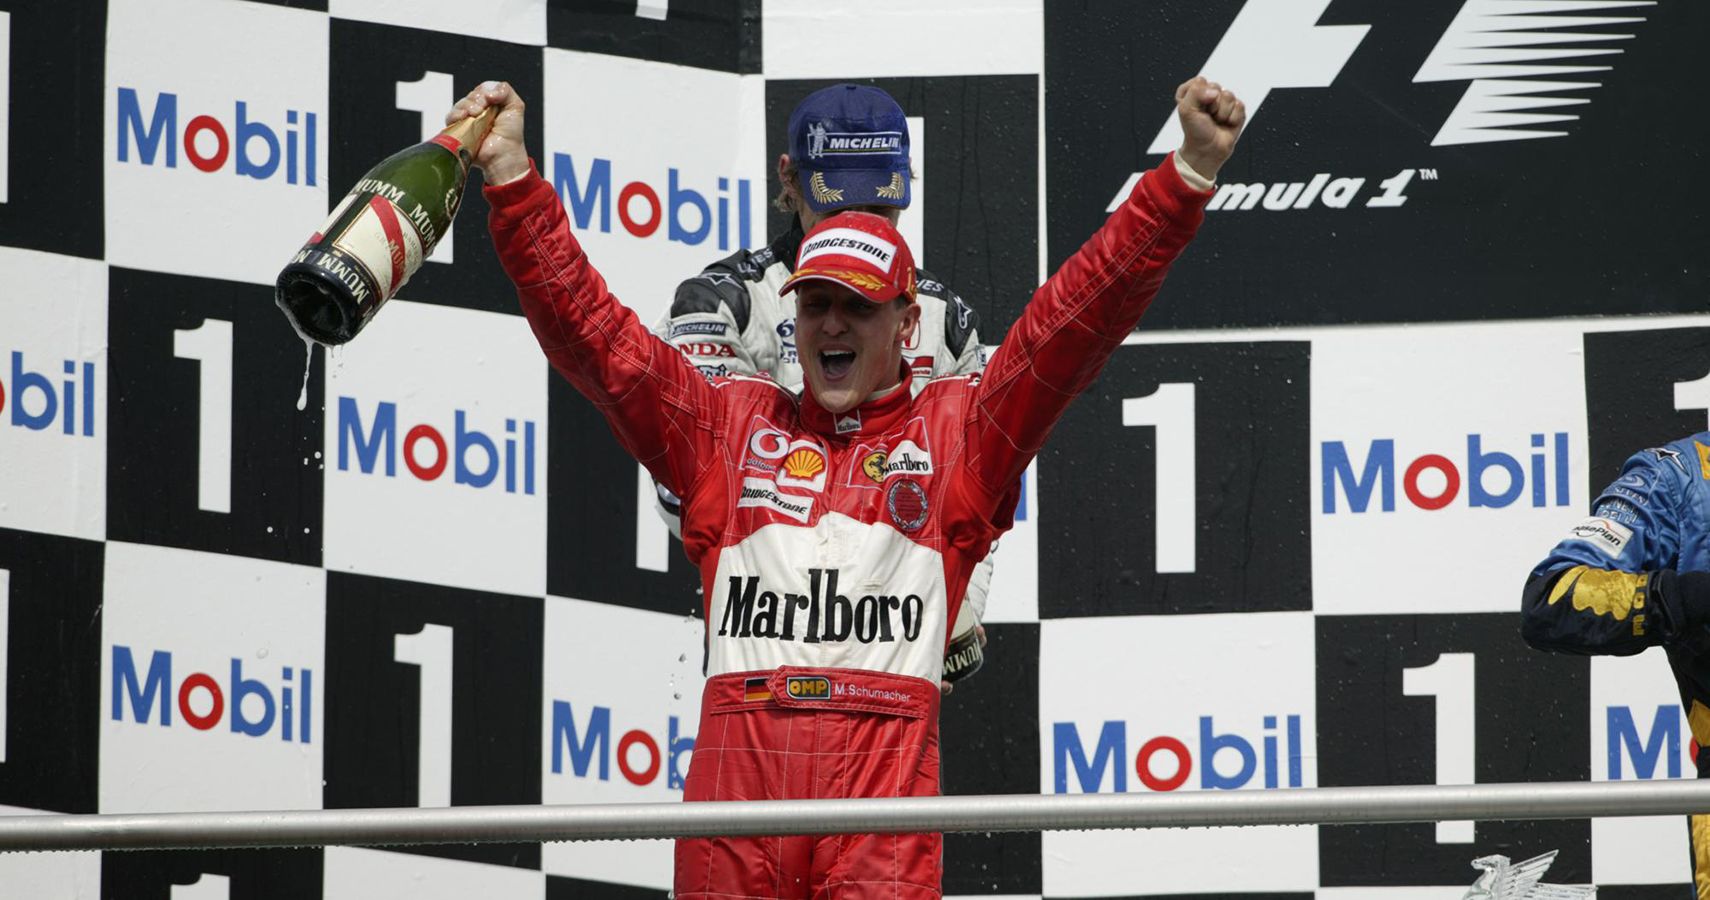 Michael Schumacher podium celebration